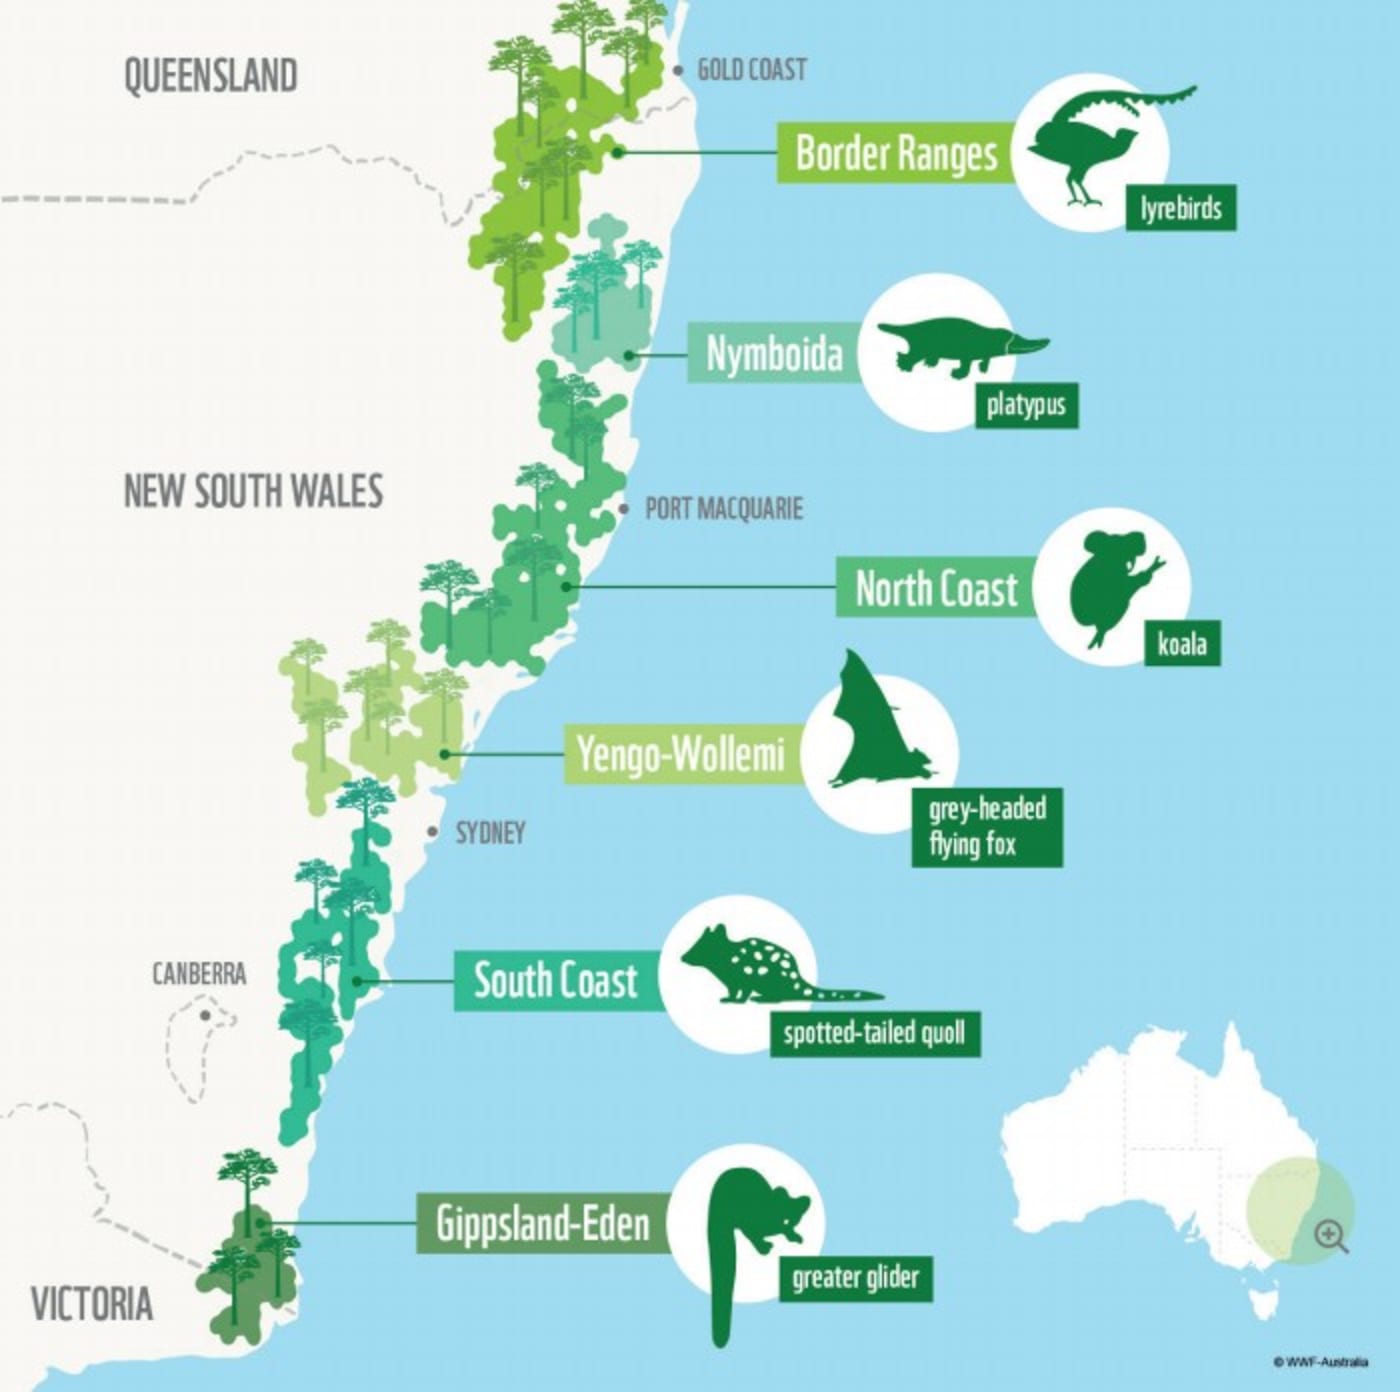 Six priority landscapes identified by WWF-Australia